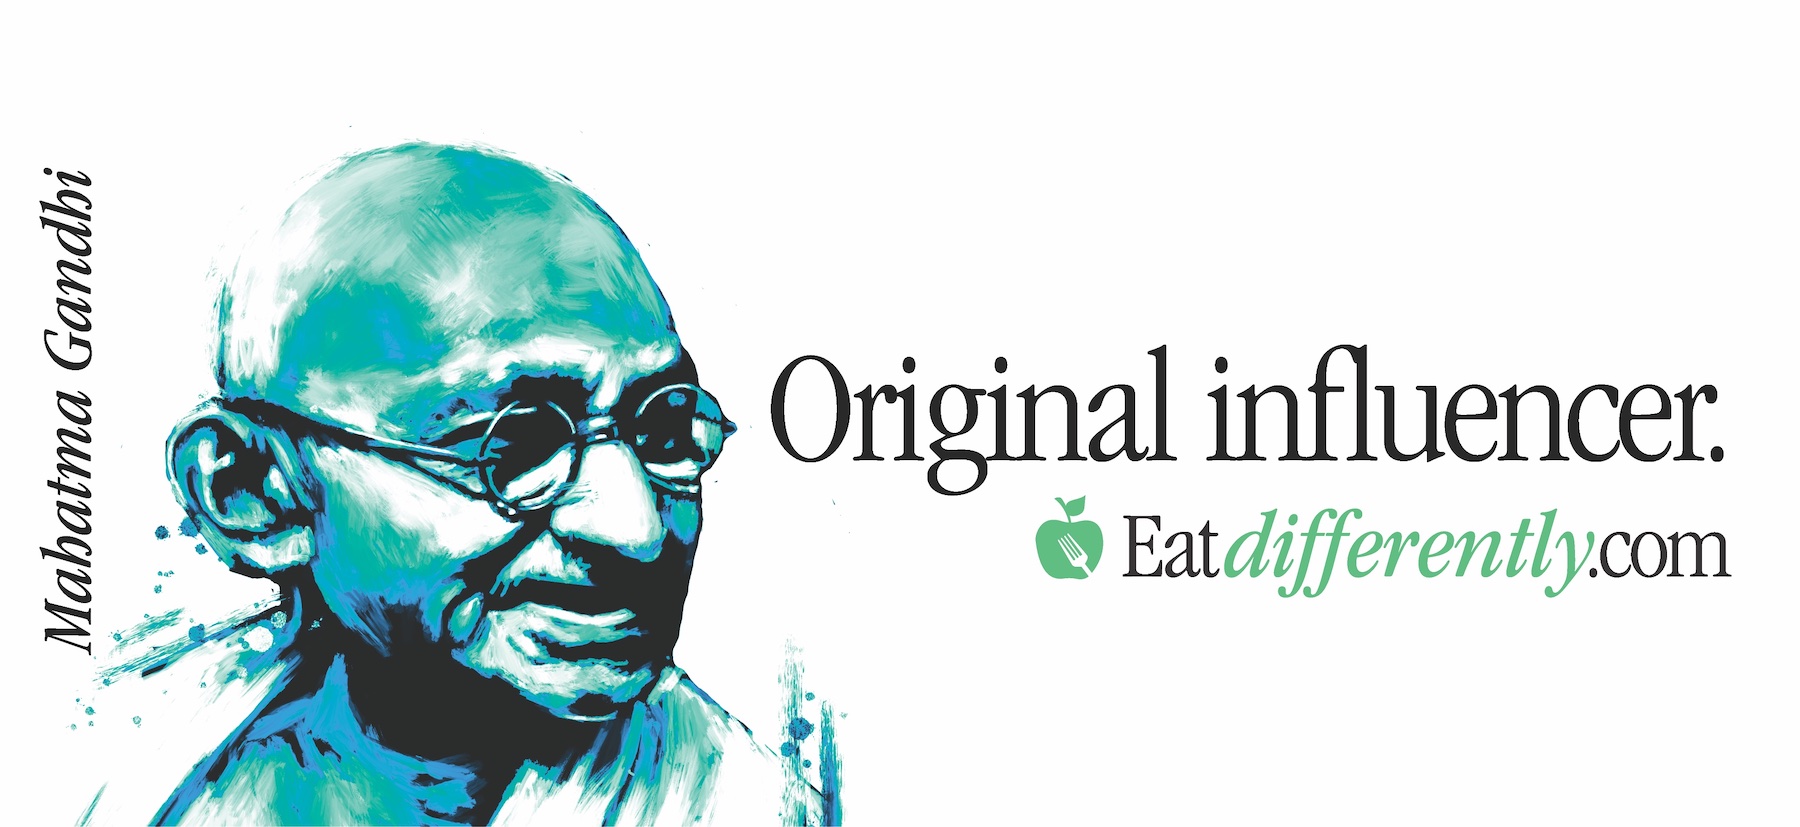 Eat Differently Billboard - Gandhi